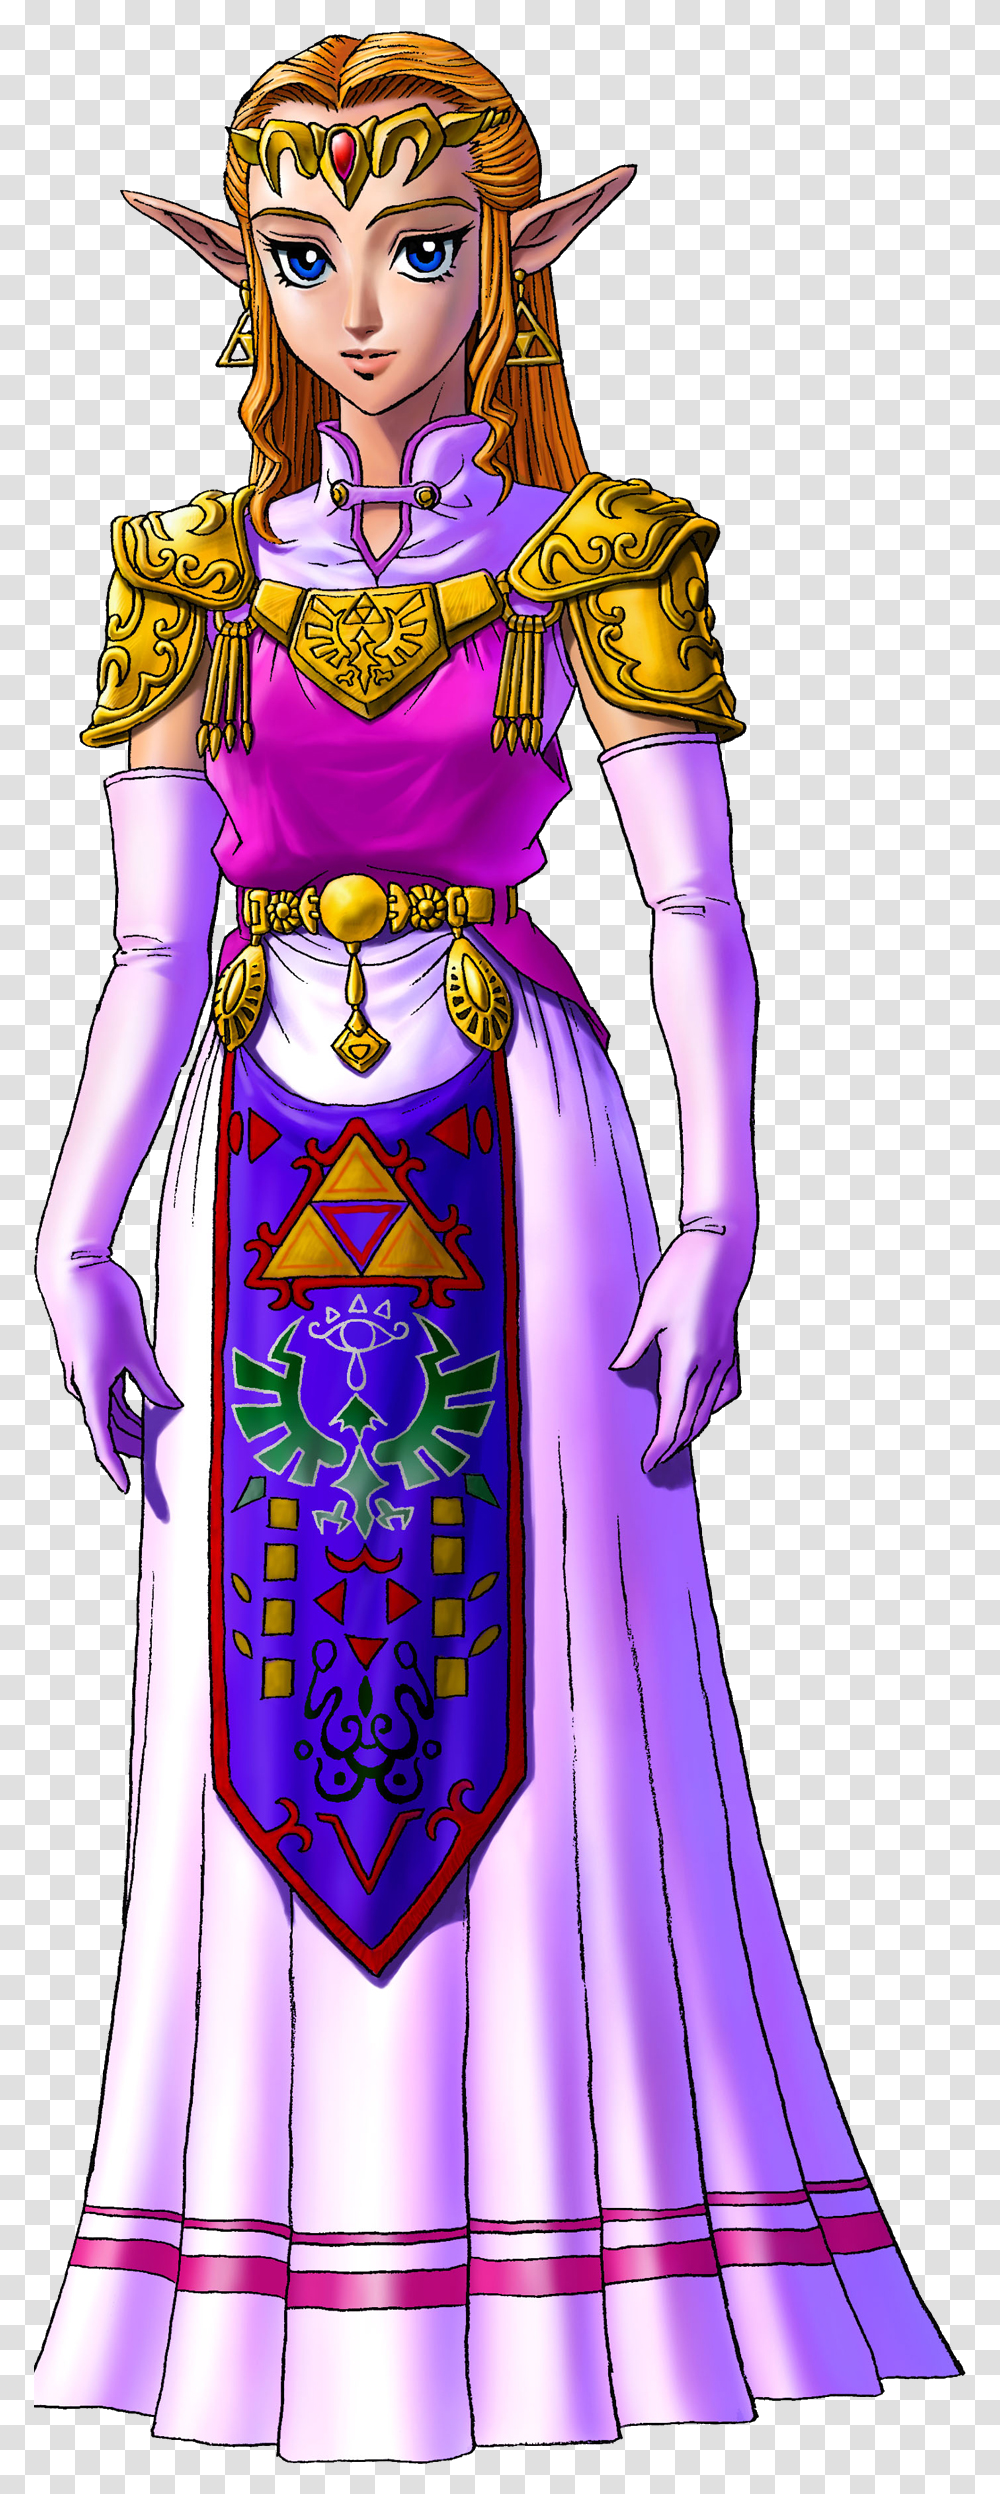 Index Of Imageszeldazeldas Zelda Ocarina Of Time Zelda, Clothing, Robe, Fashion, Gown Transparent Png